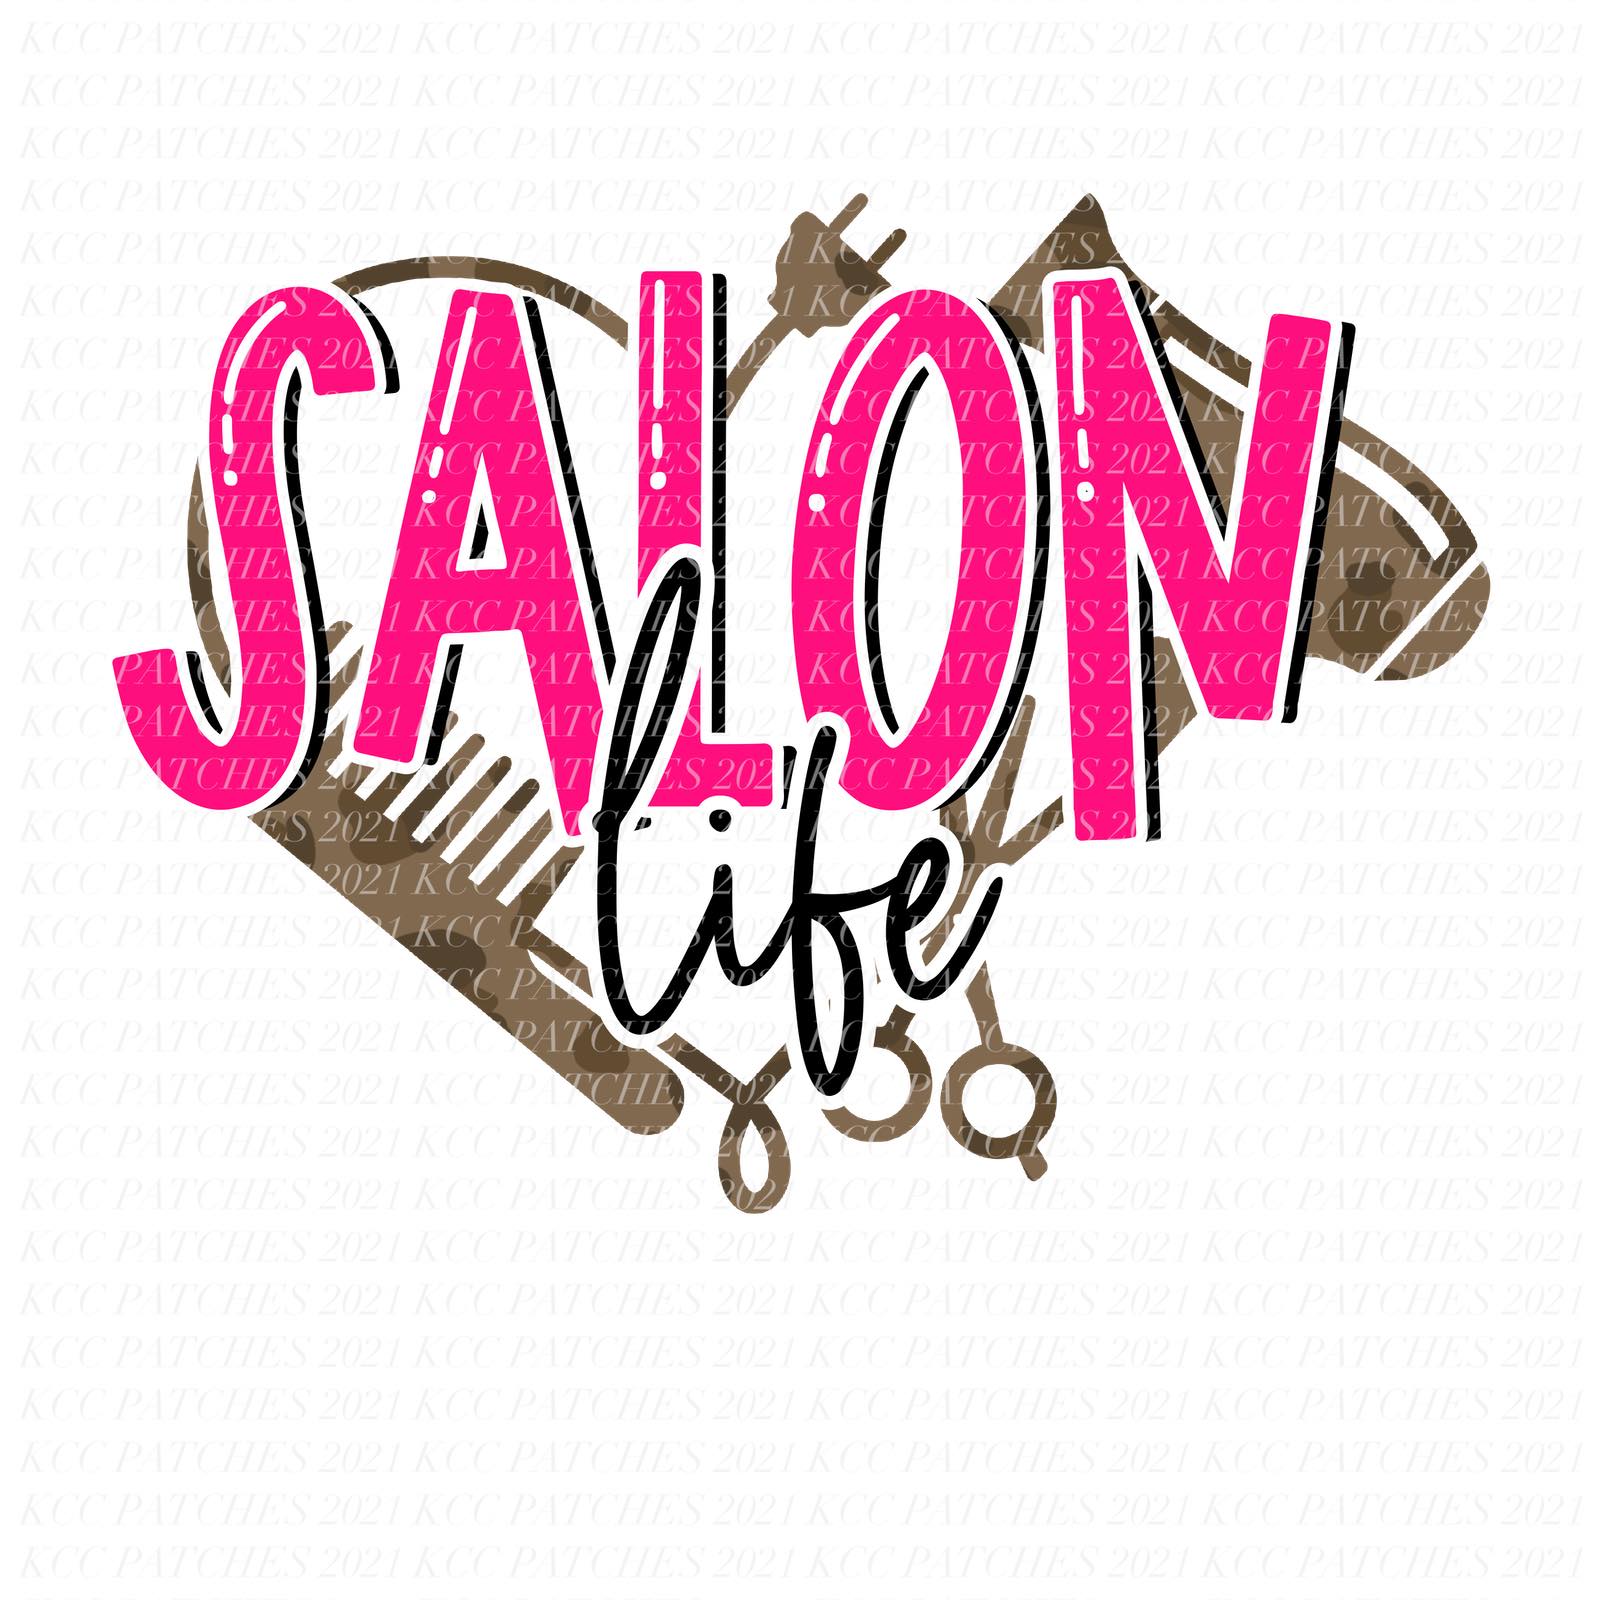 Salon Life